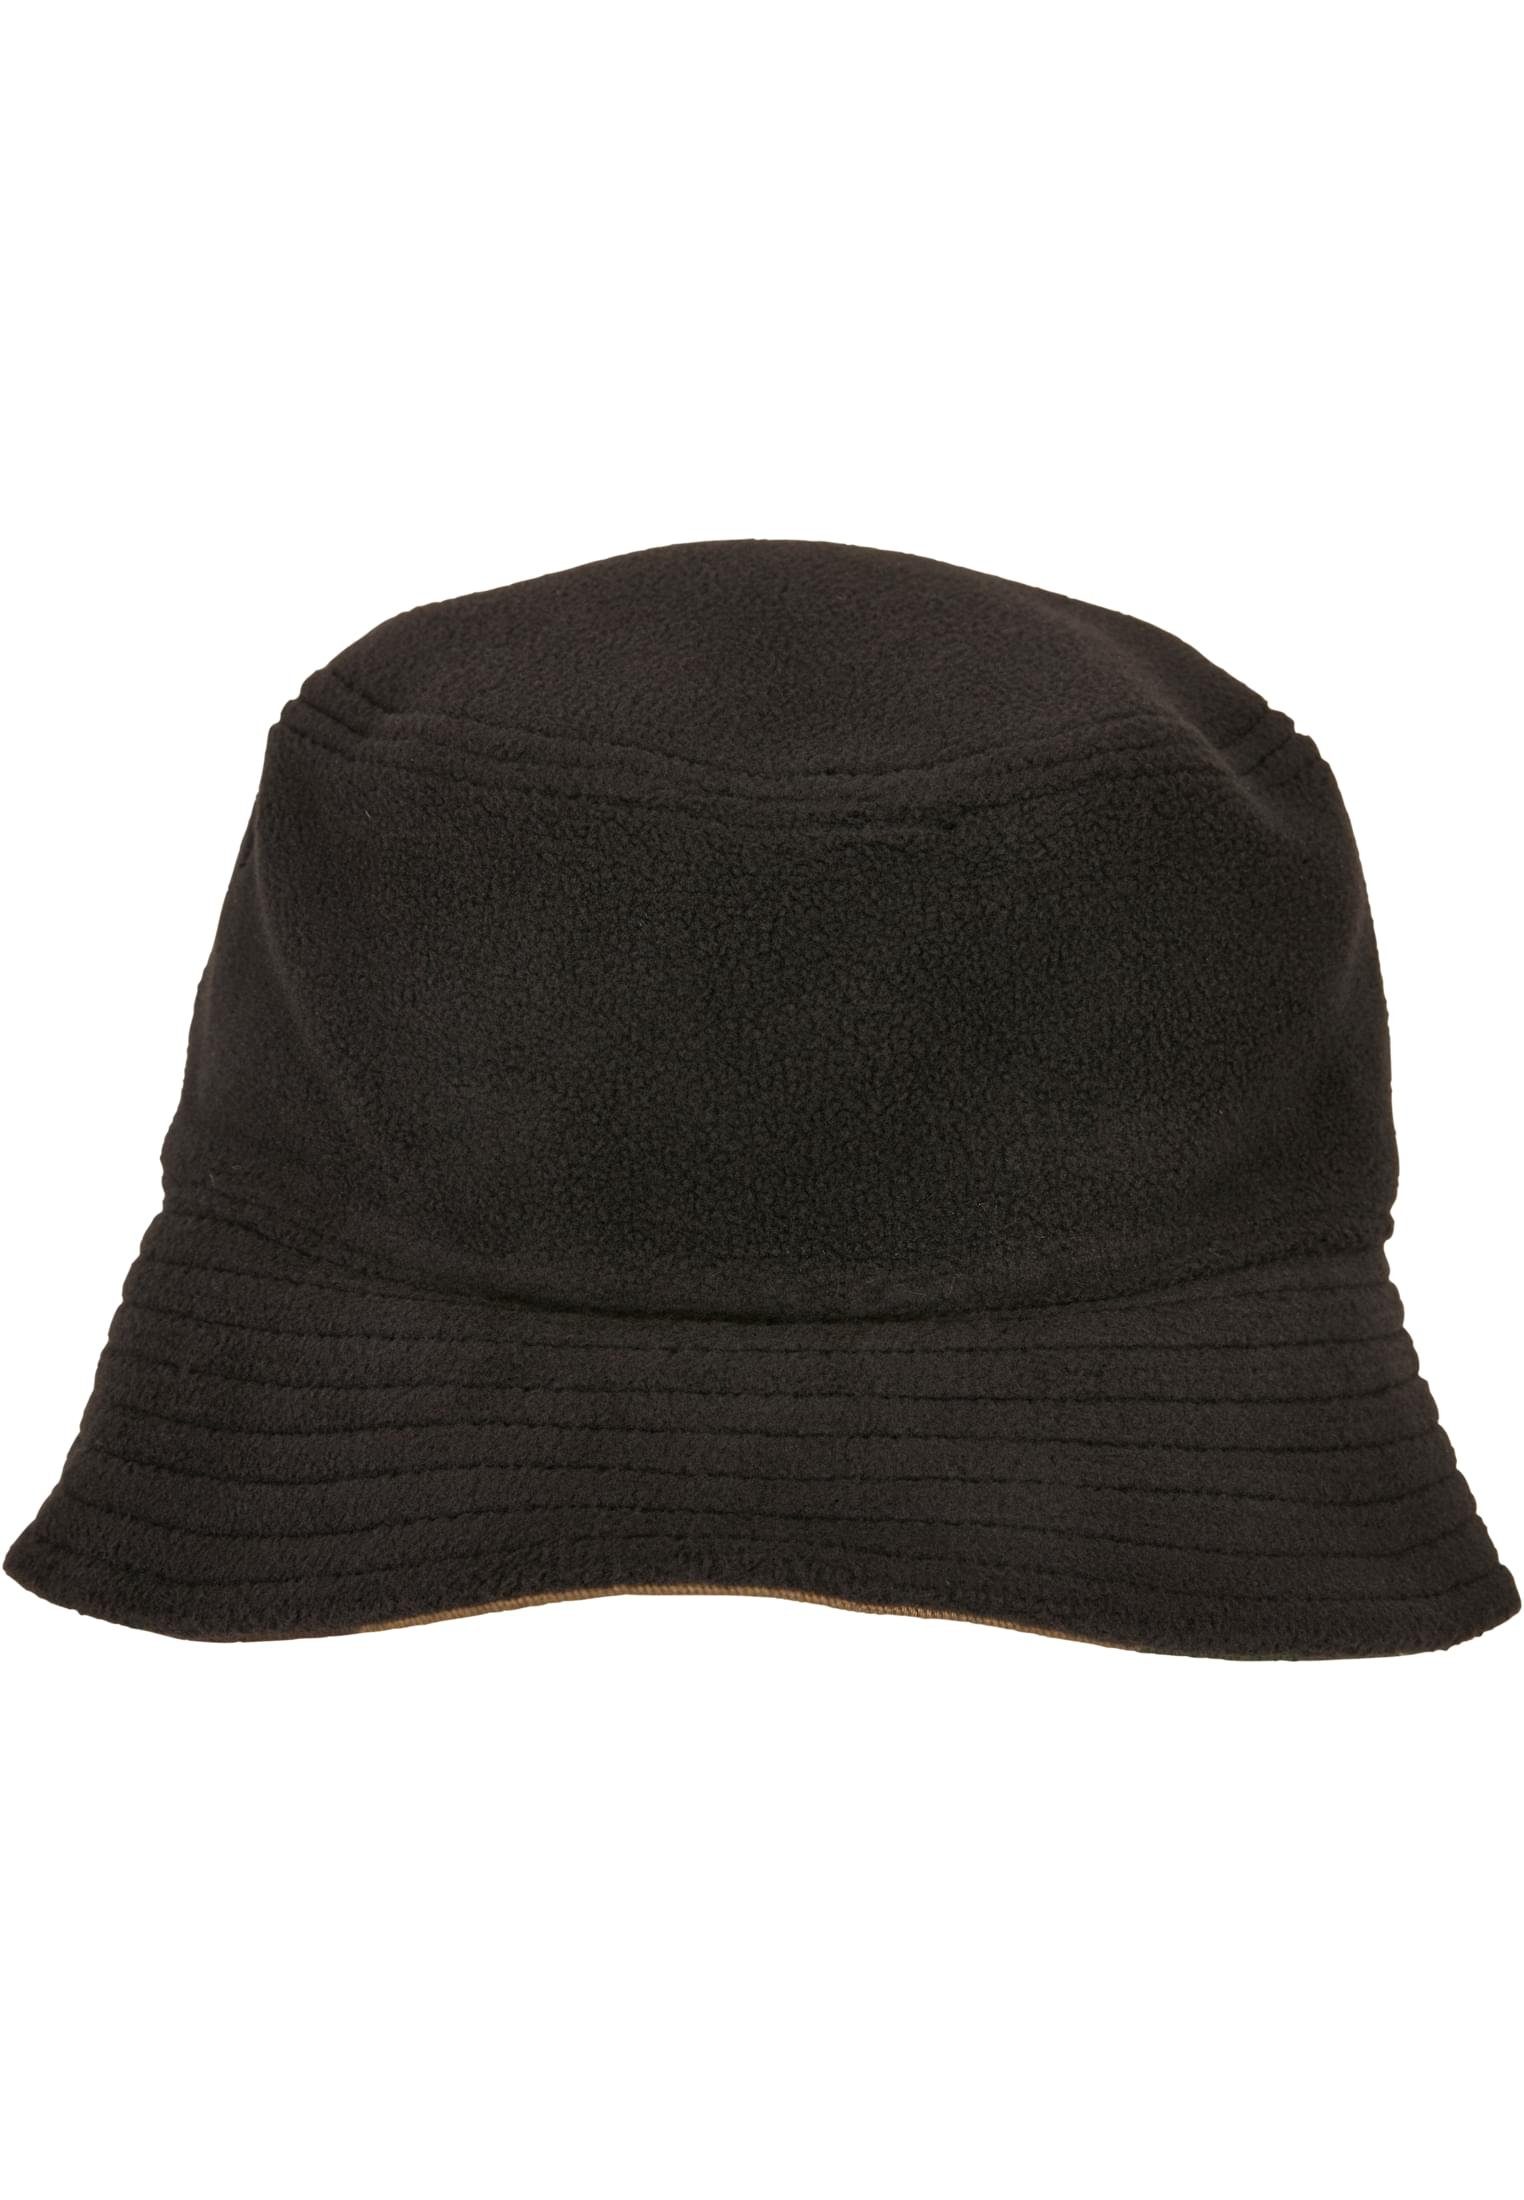 Accessoires & Knock the Flex CAYLER Hat Hustle SONS Bucket Cap